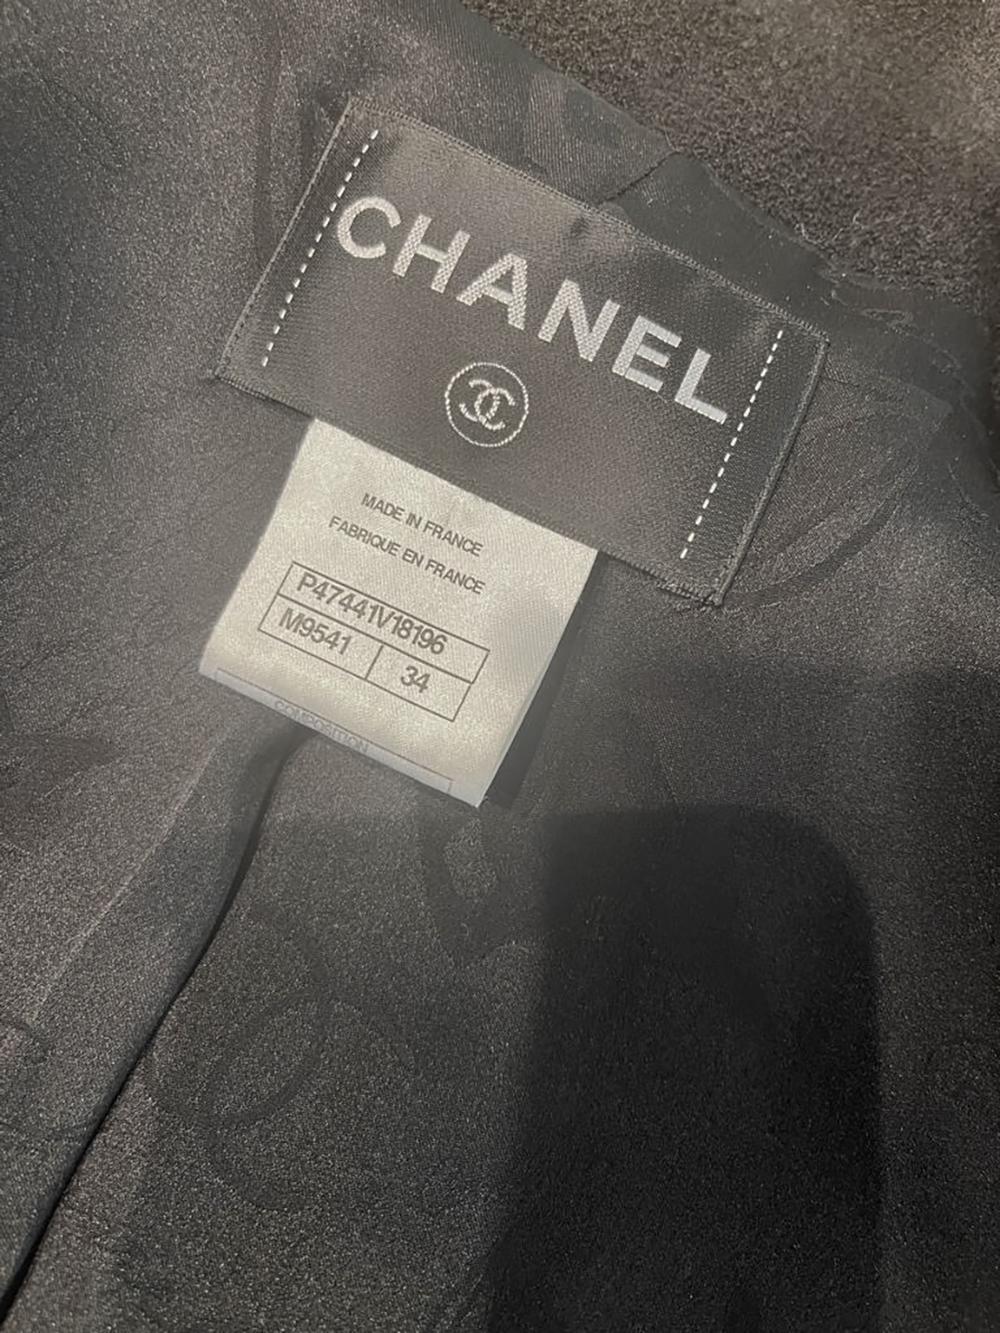 Chanel Paris / Singapore Runway Black Tweed Coat 7